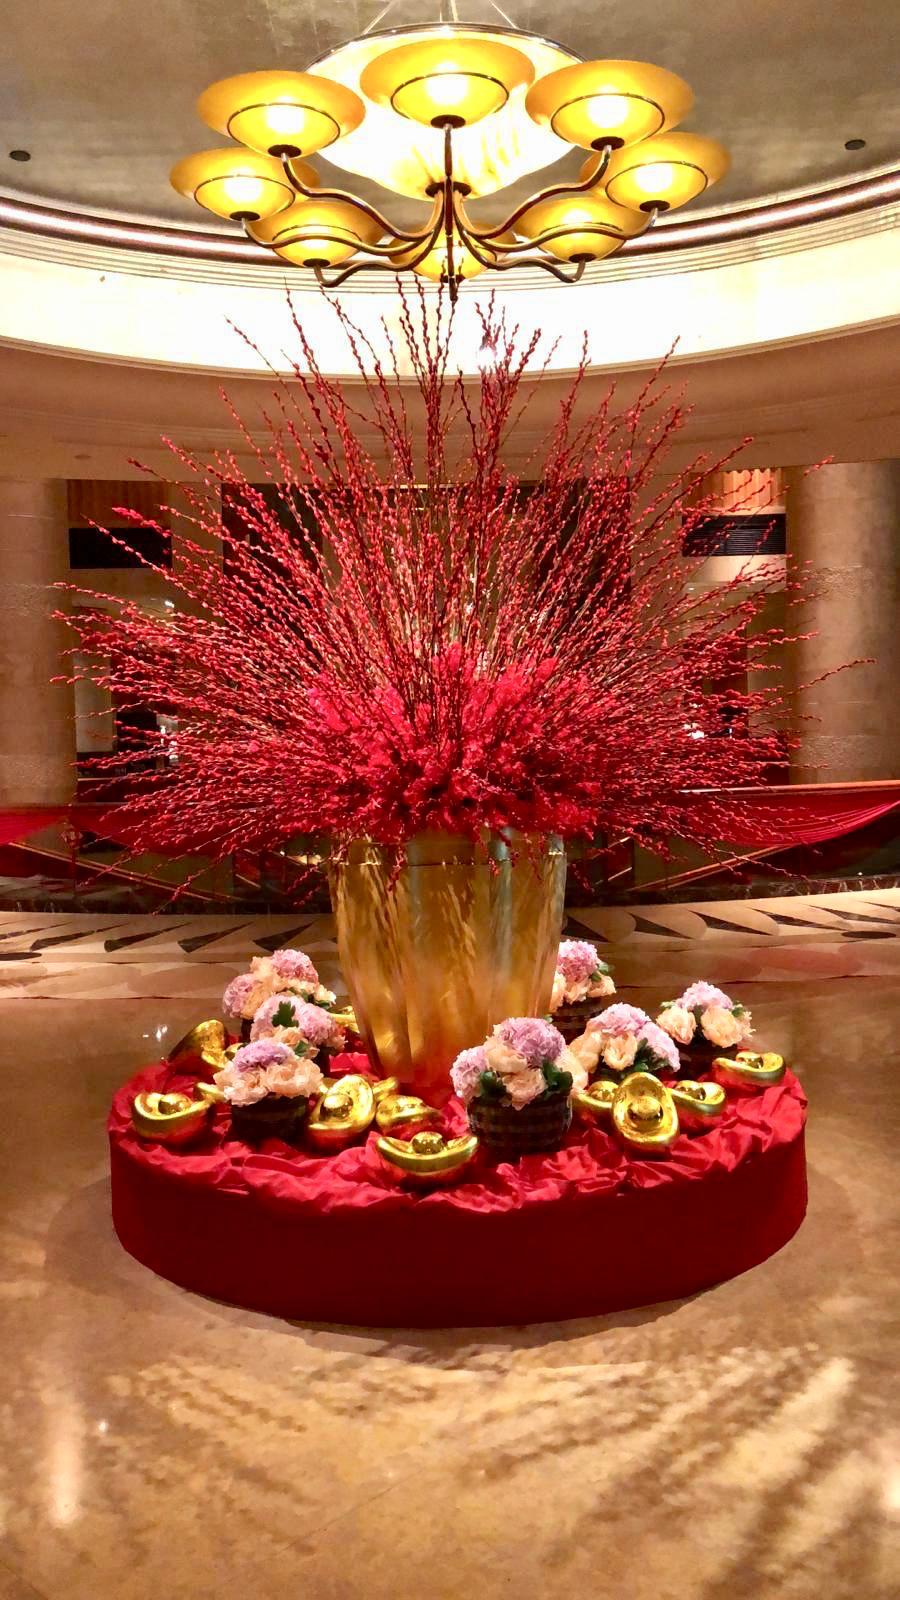 Chinese New Year Decoration  Festive CNY Decor 